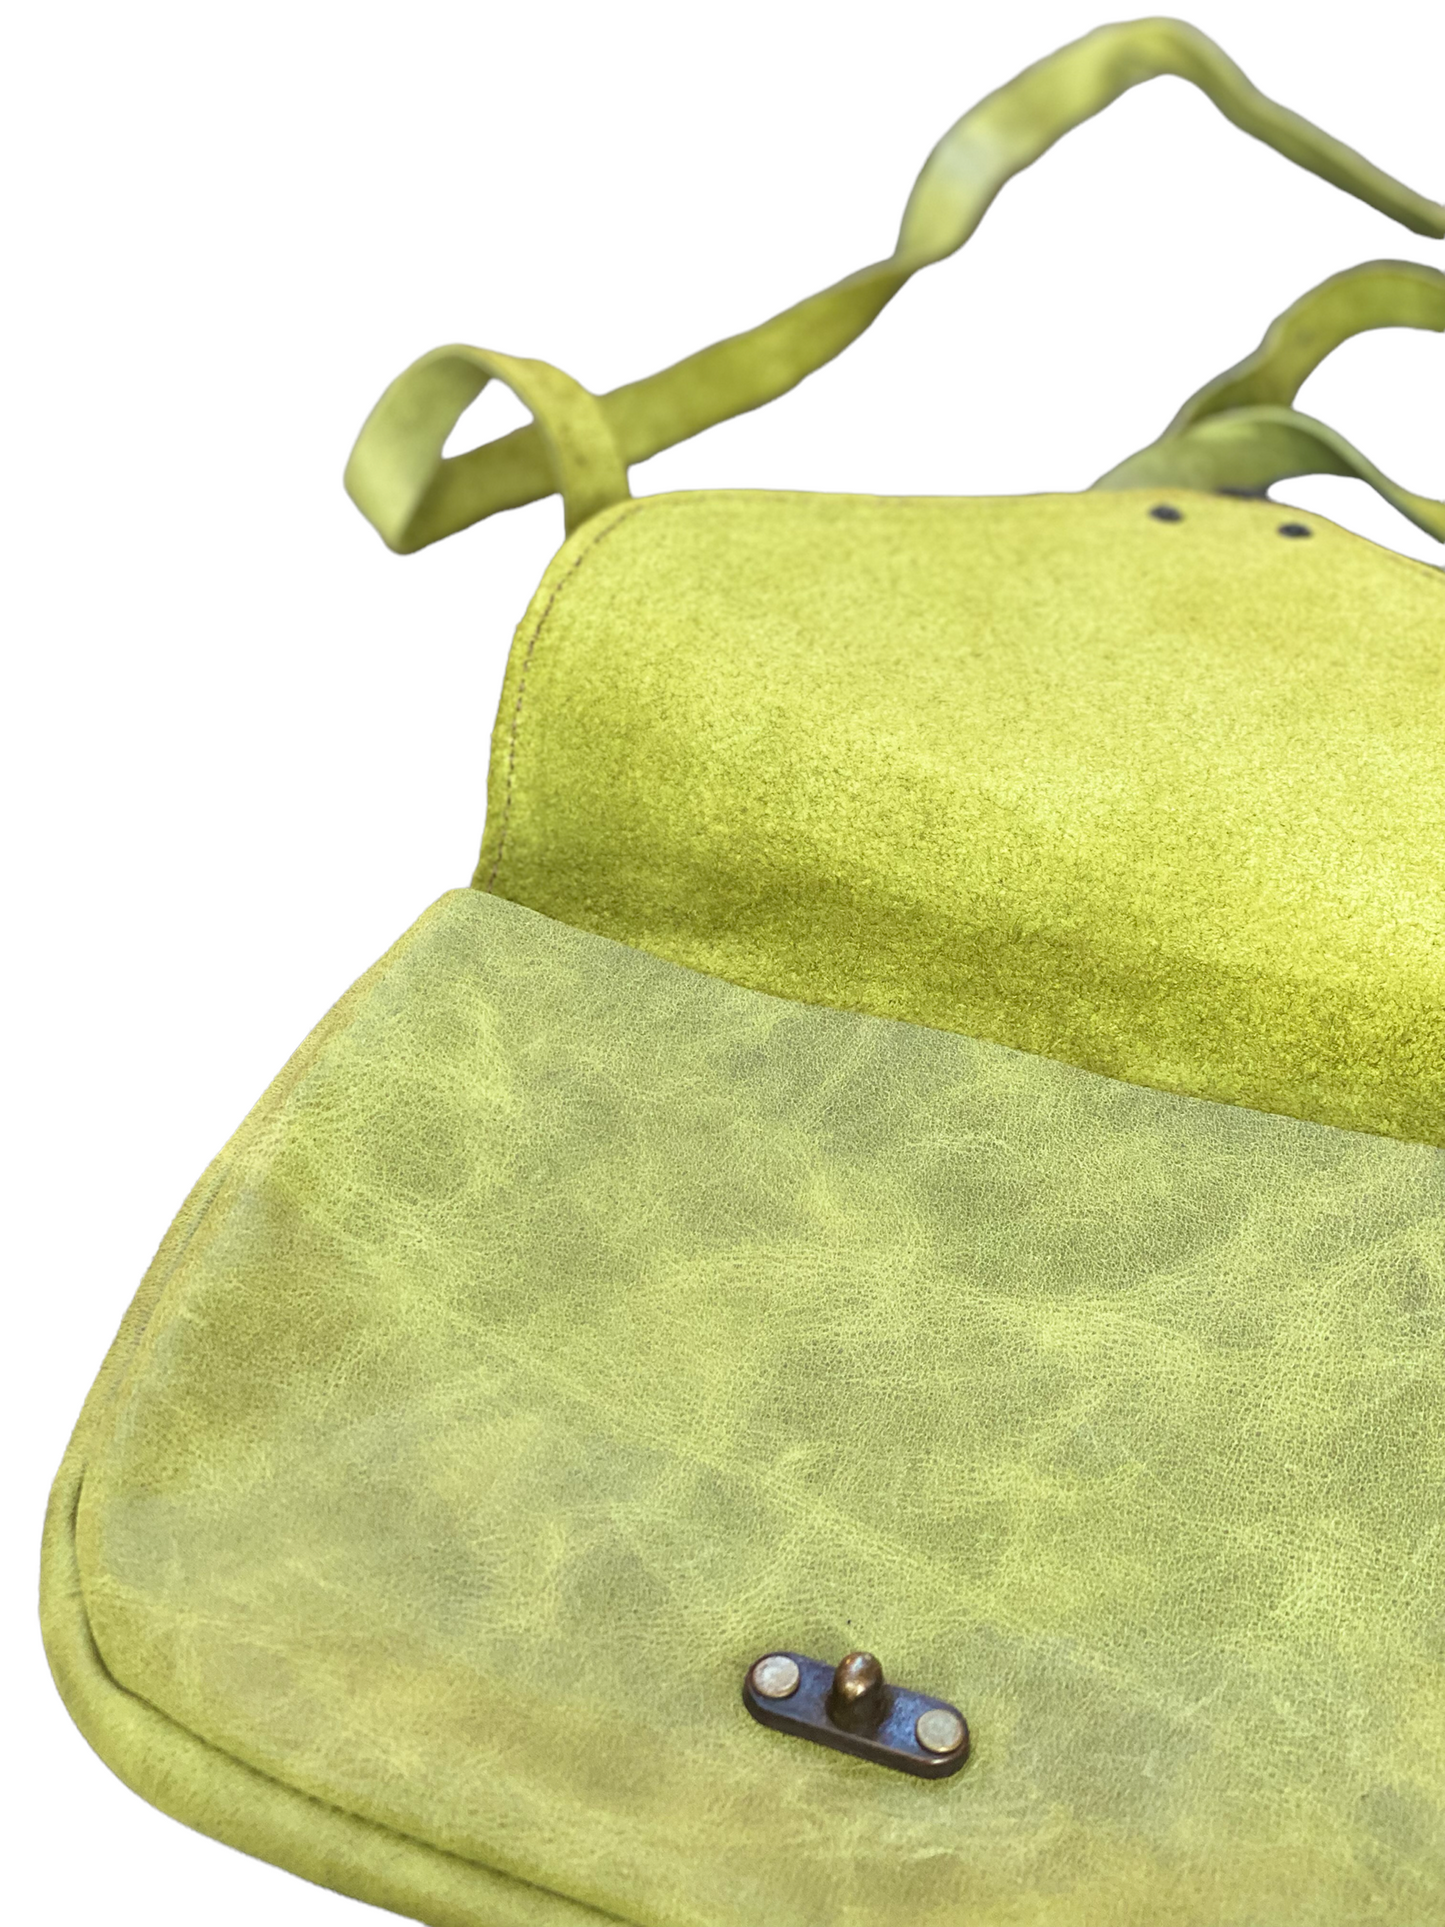 Damska torebka listonoszka - zielona 100% skóra (zamsz)